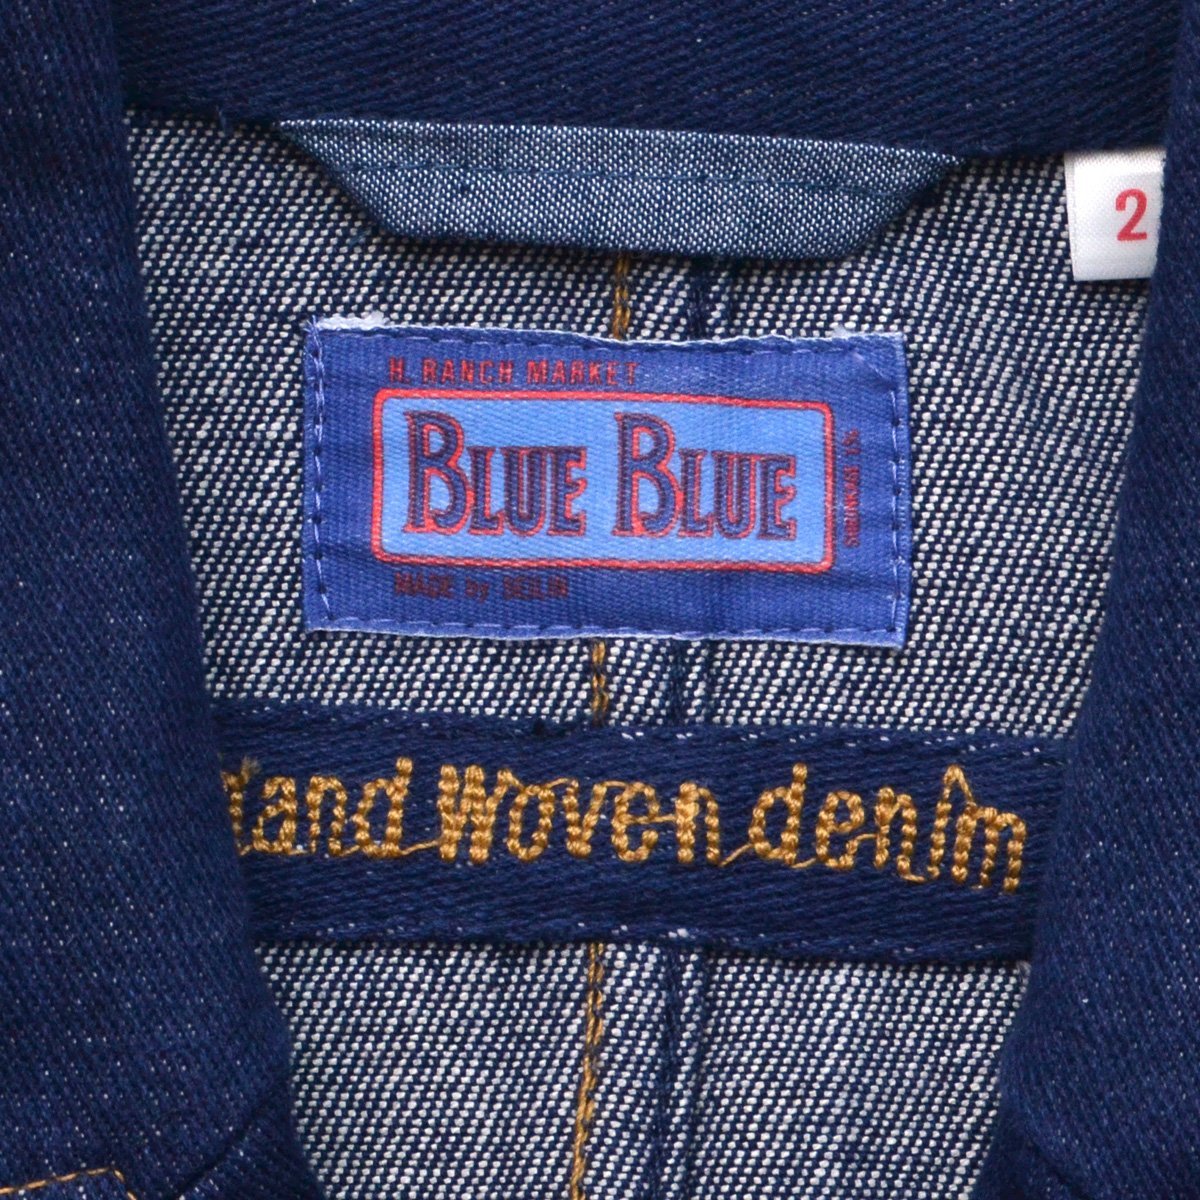 BLUE BLUE ブルーブルー ハンドウーブン カバーオール ジャケット 本藍染め HAND WOVEN DENIM 2サイズ メンズ 700080-963 JK1952 M655672_画像3